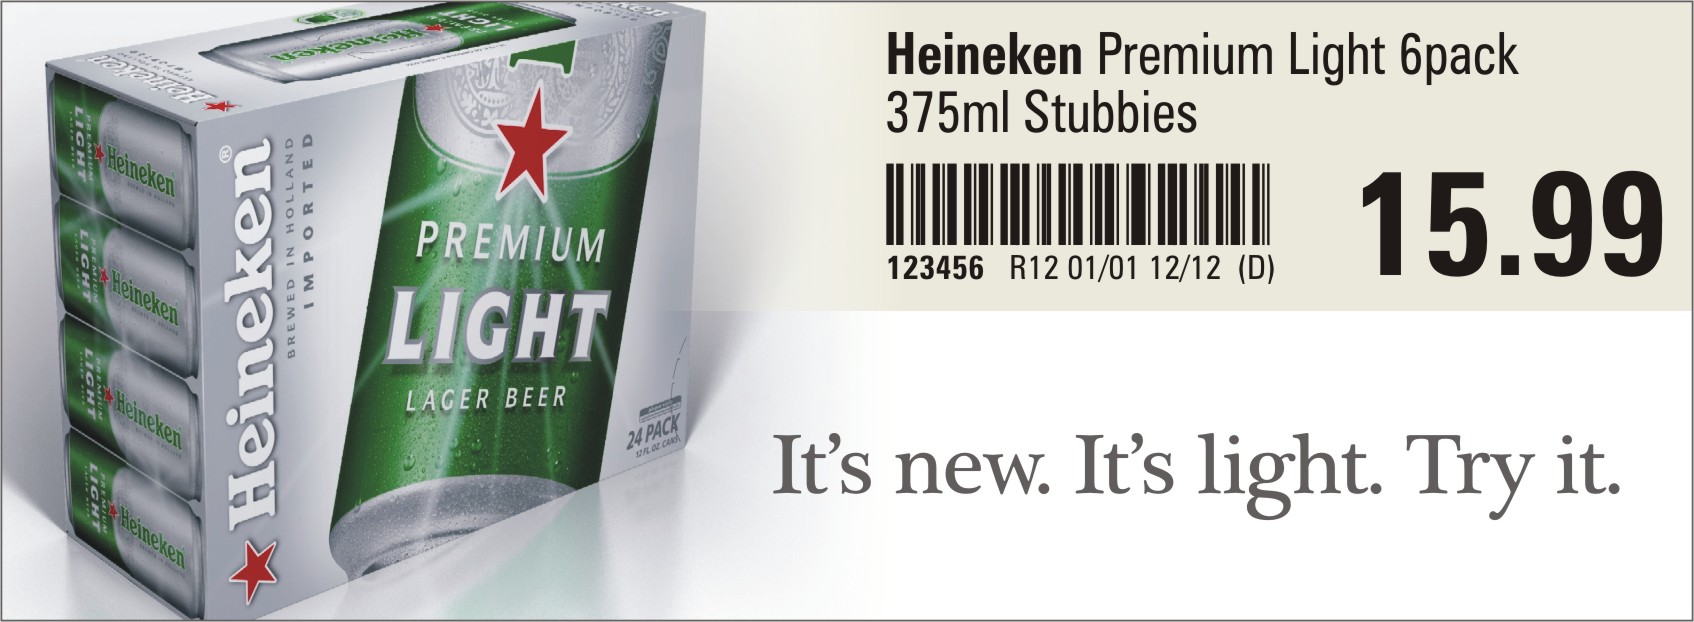 SignIQ ticket for Heineken beer